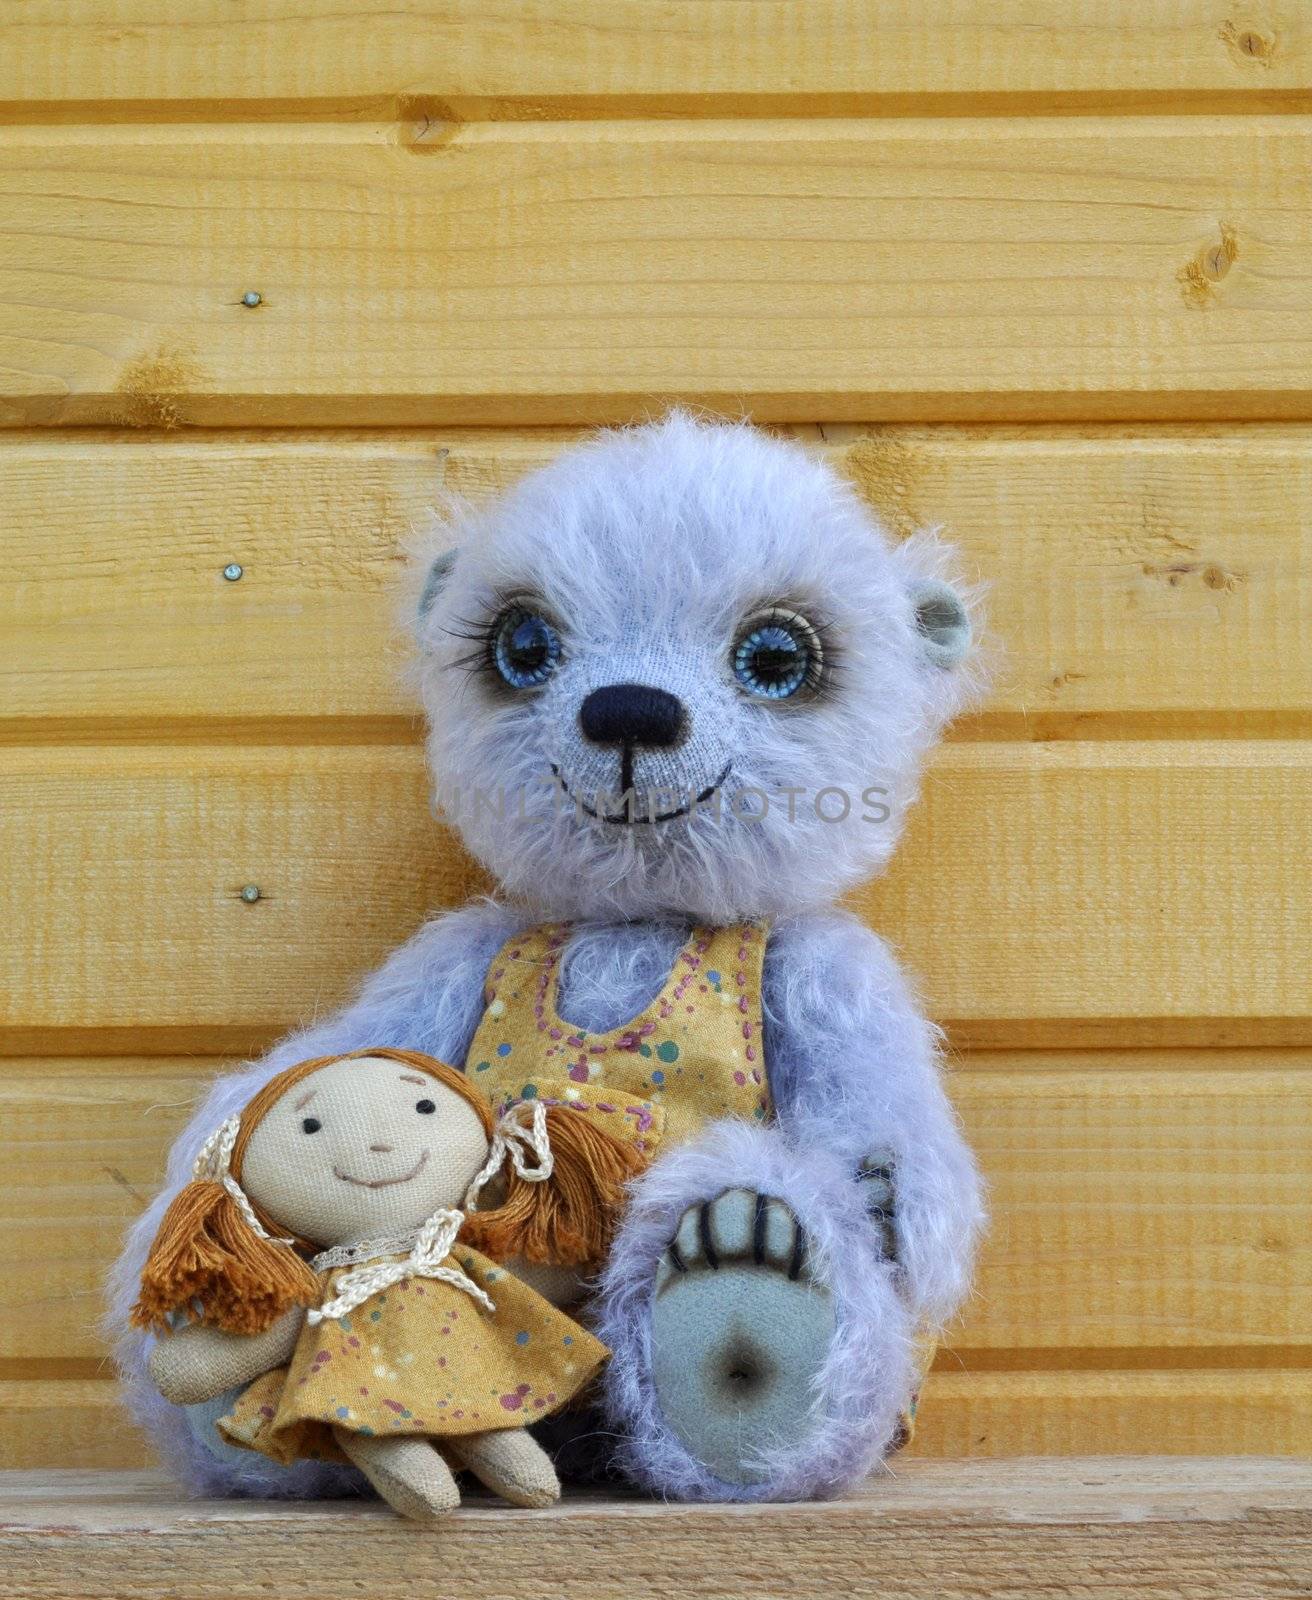 Teddy bear with girlfriend by alexcoolok